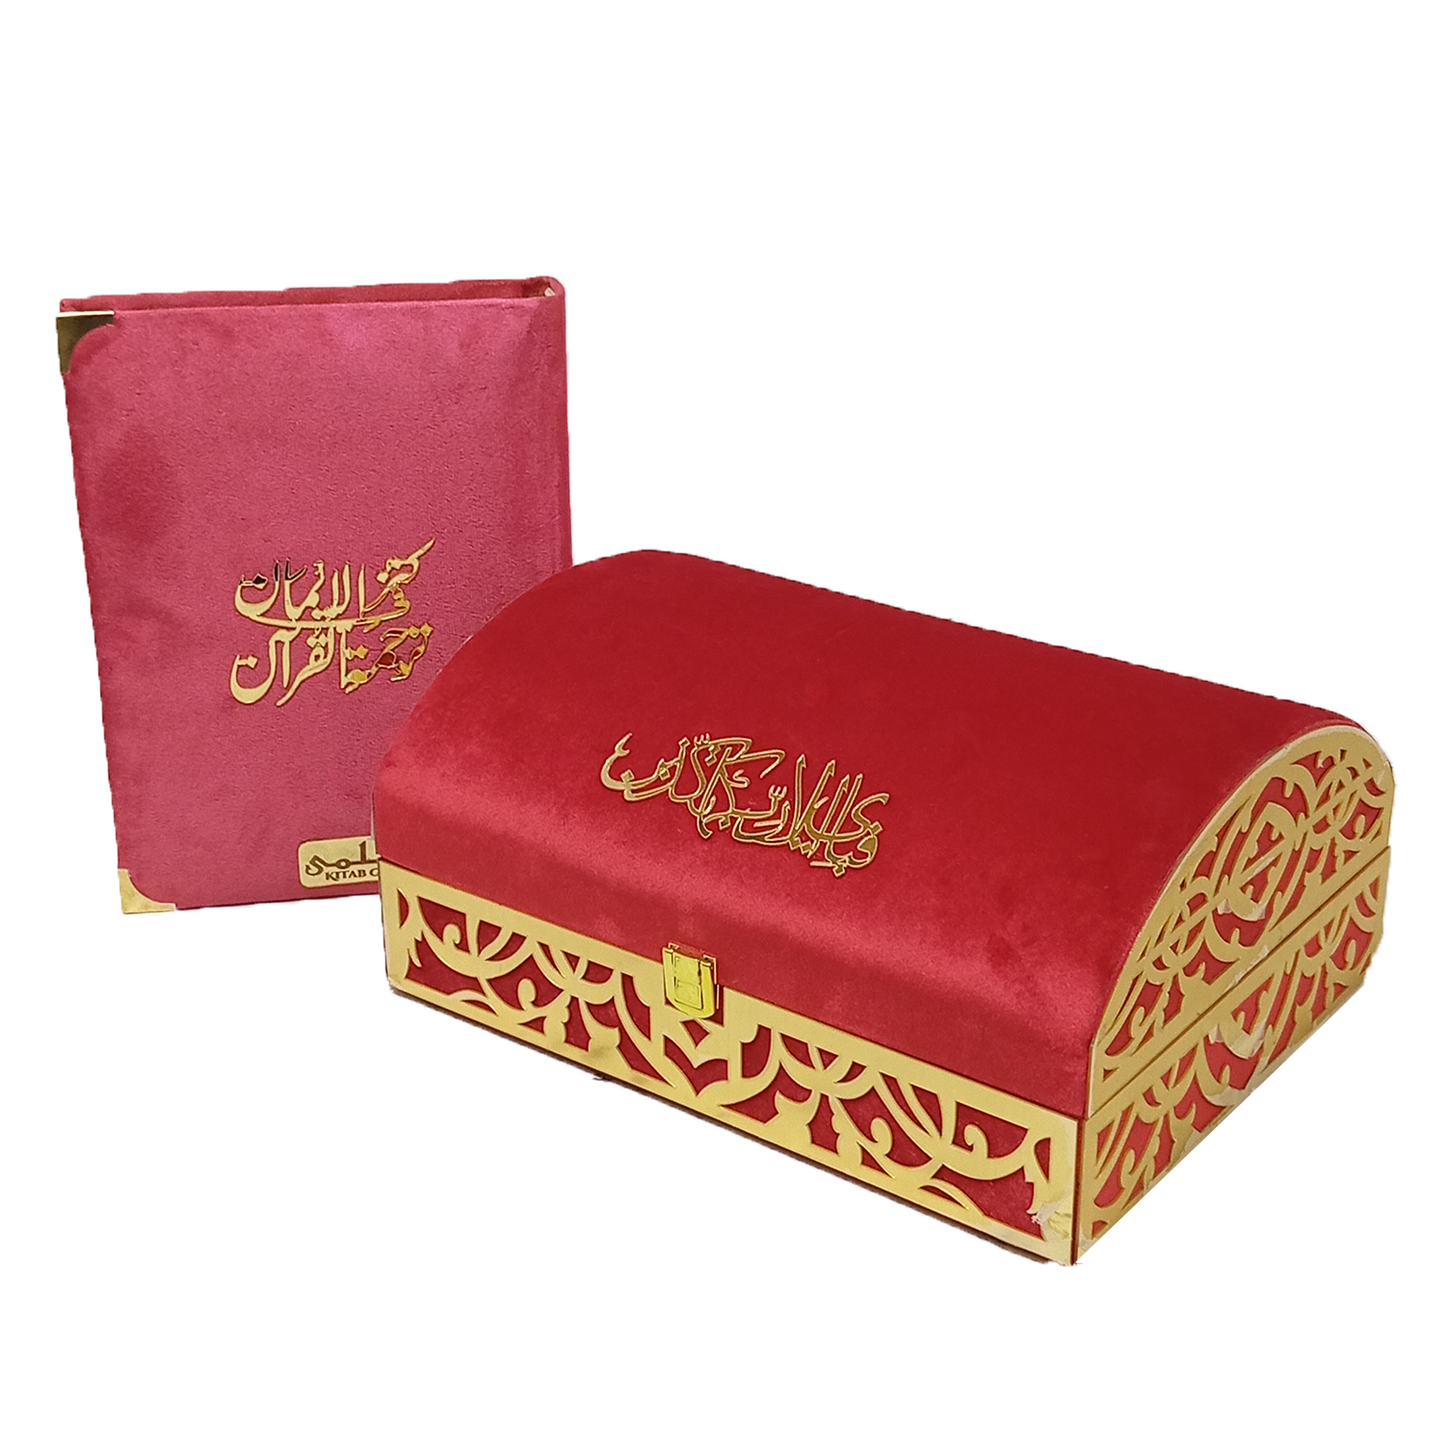 [11/DB] Al-Quran-Ul-Kareem With Kanzul Iman (Urdu Translation) - Gift Edition